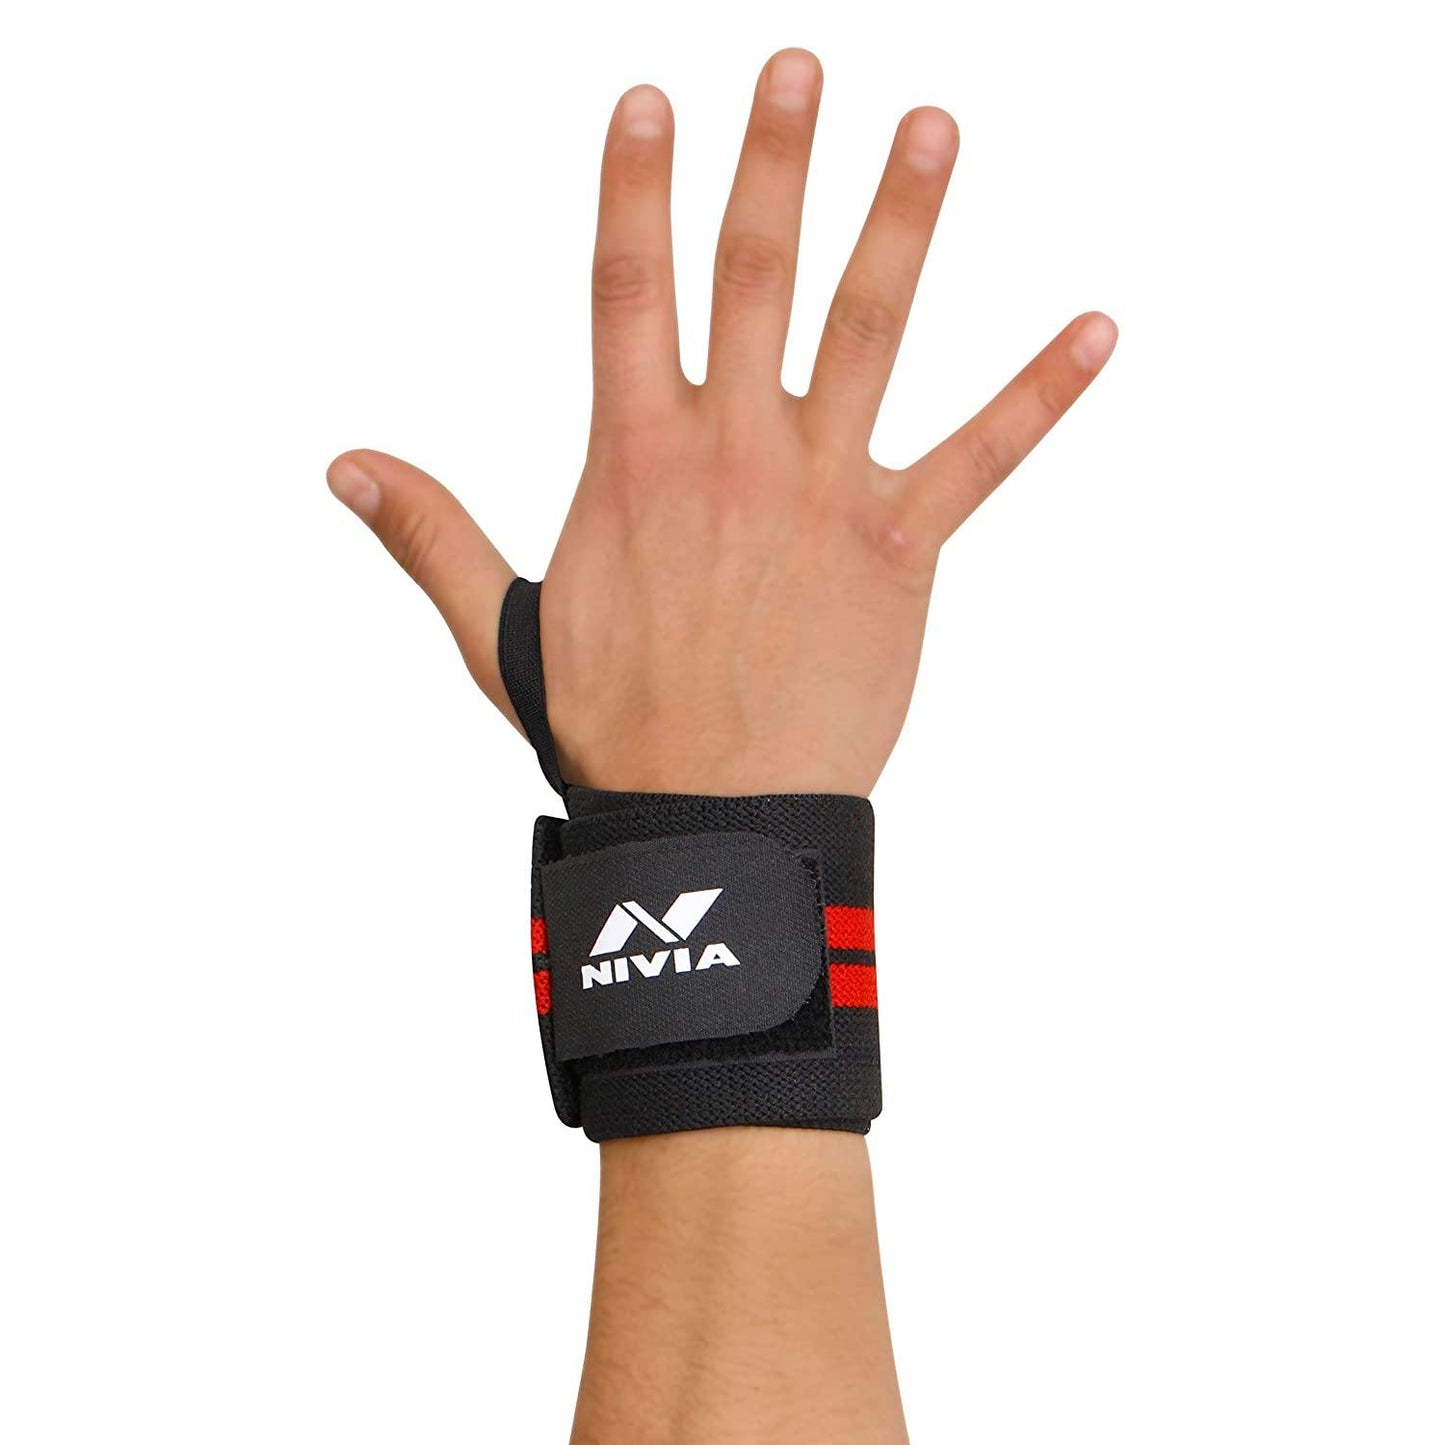 Nivia 11041 Cotton Thumb Wrist Support - Best Price online Prokicksports.com